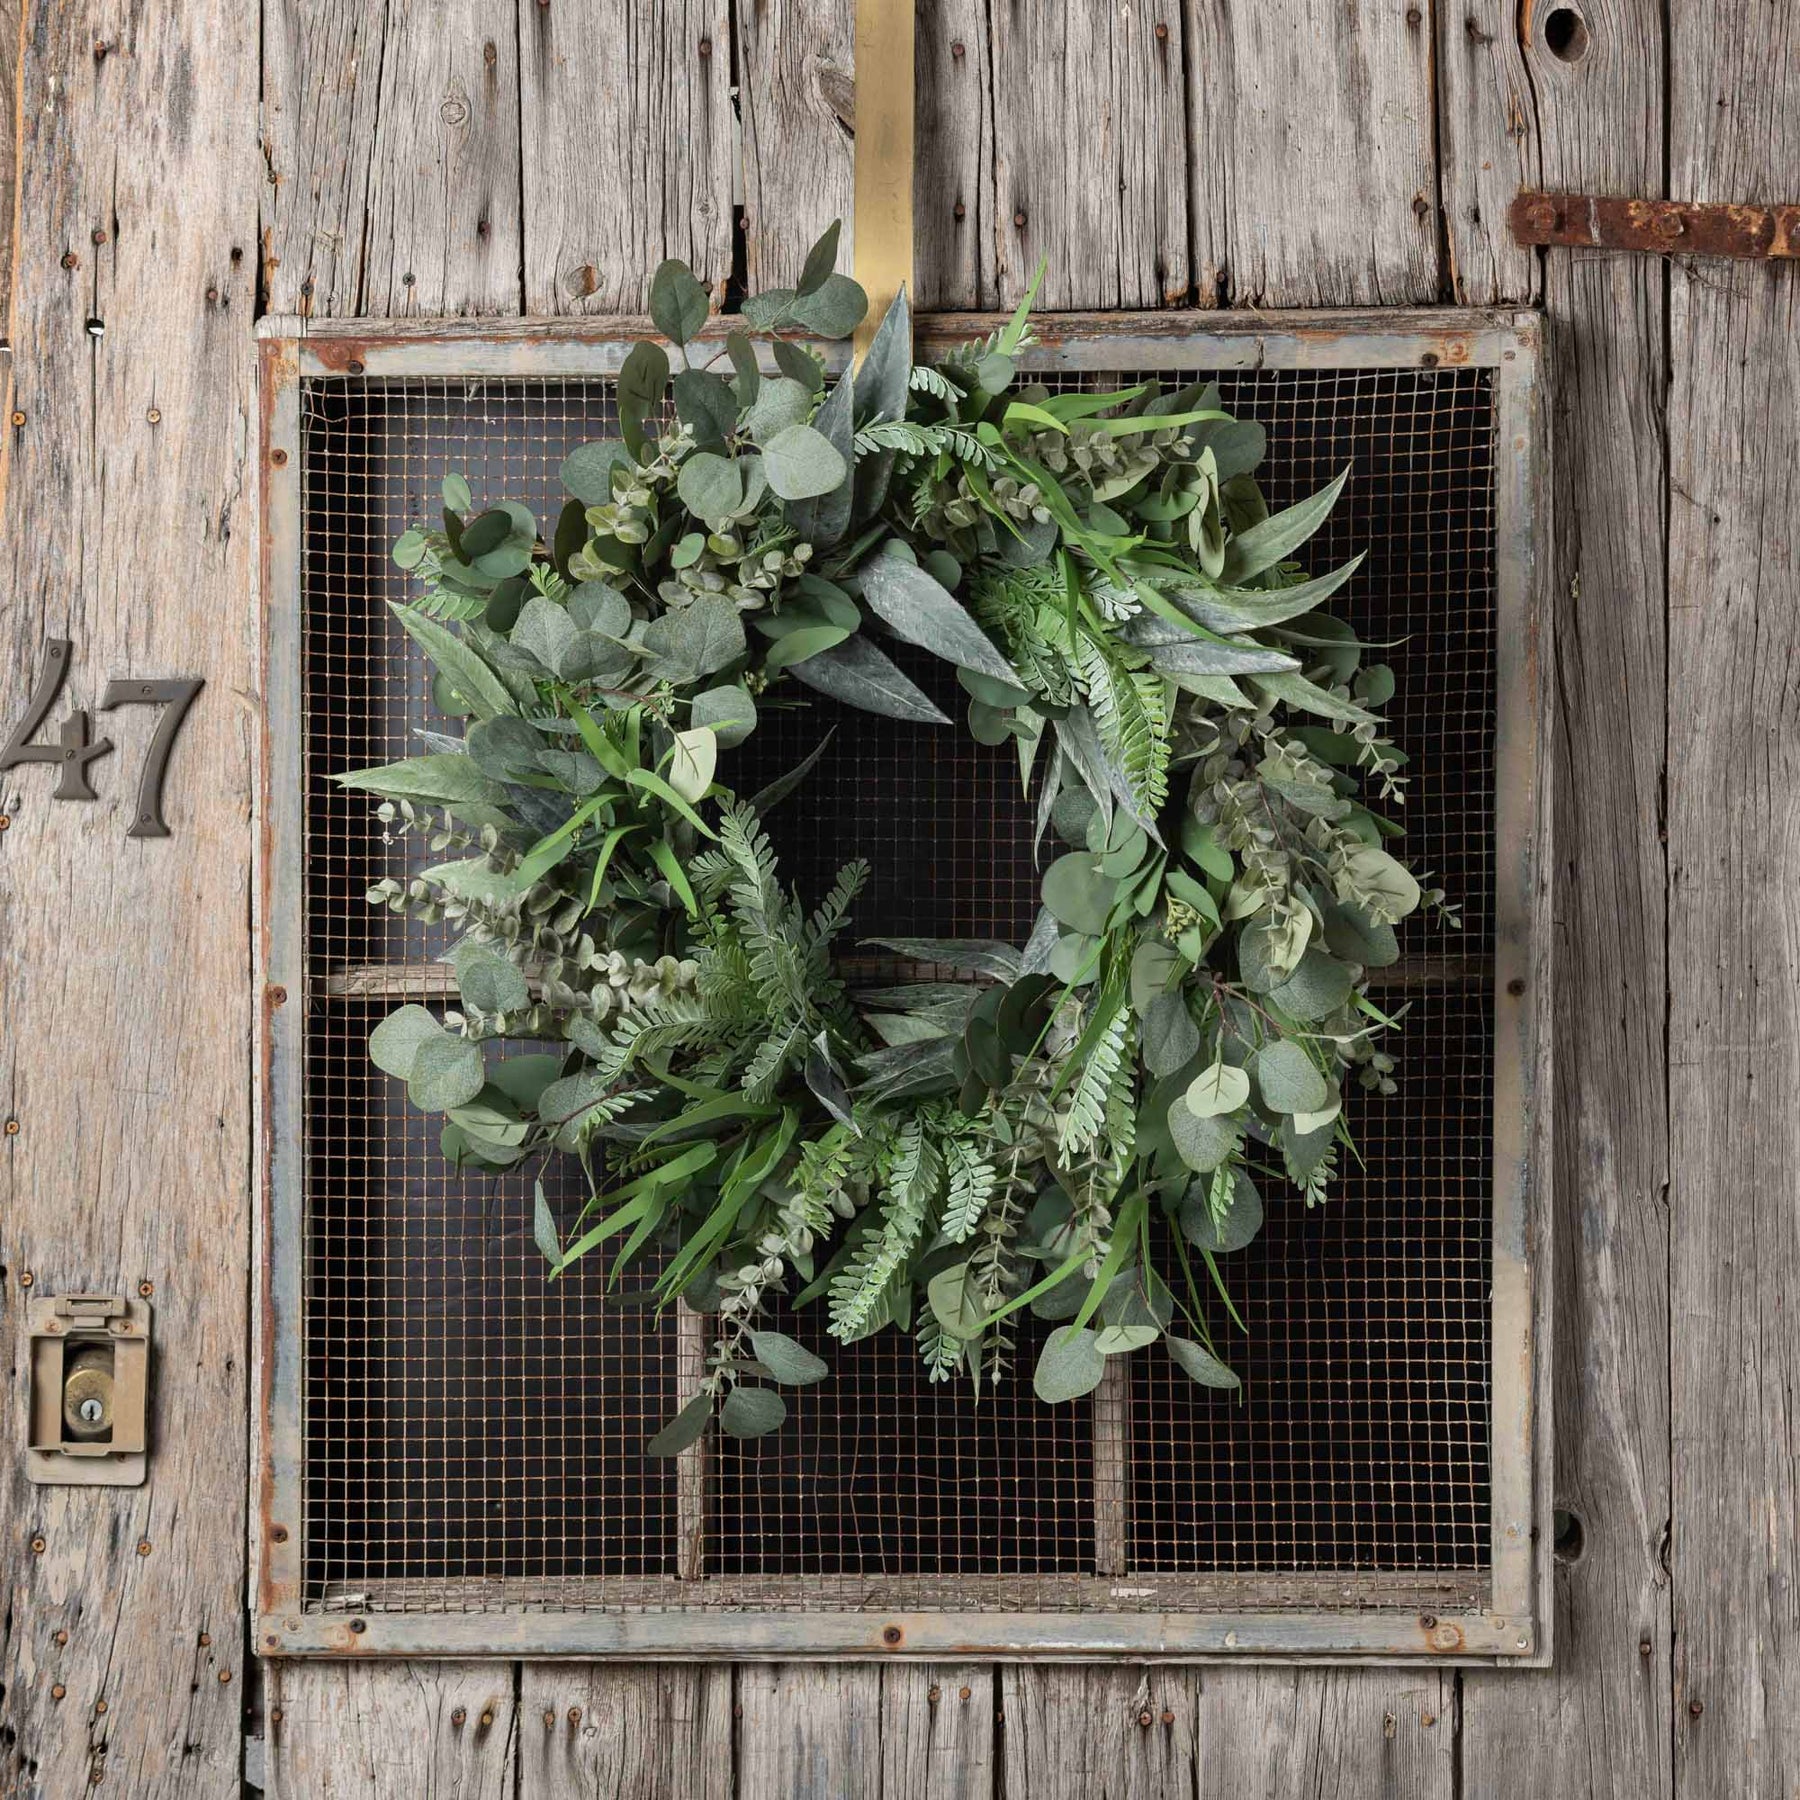 35 Pretty Spring Wreaths Ideas to Adorn Your Door This Season